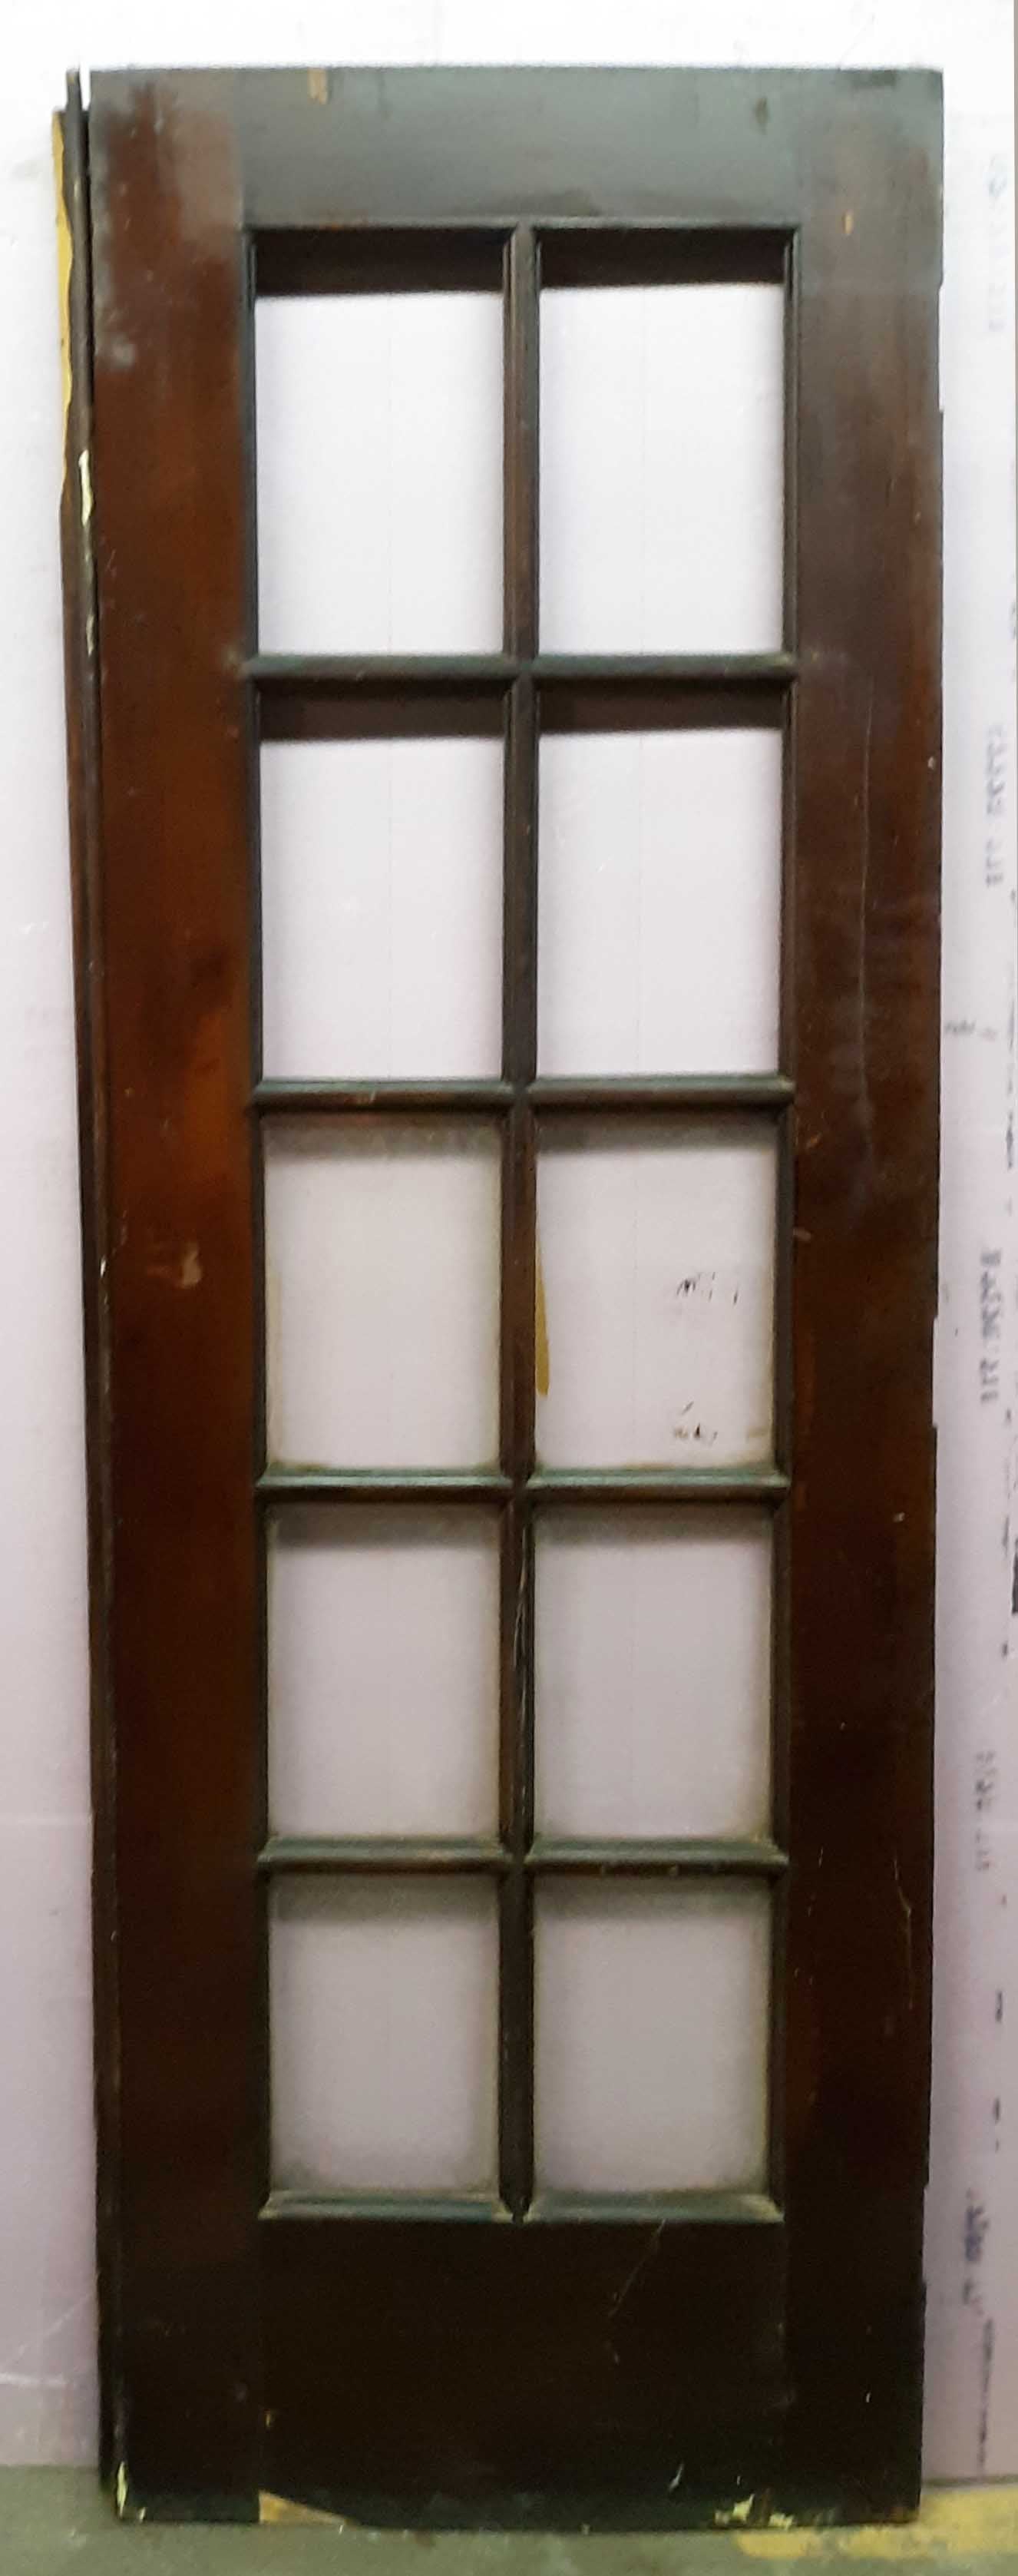 26x79.5"x1.75" Antique Vintage Old Wood Wooden Exterior French Door Window Glass